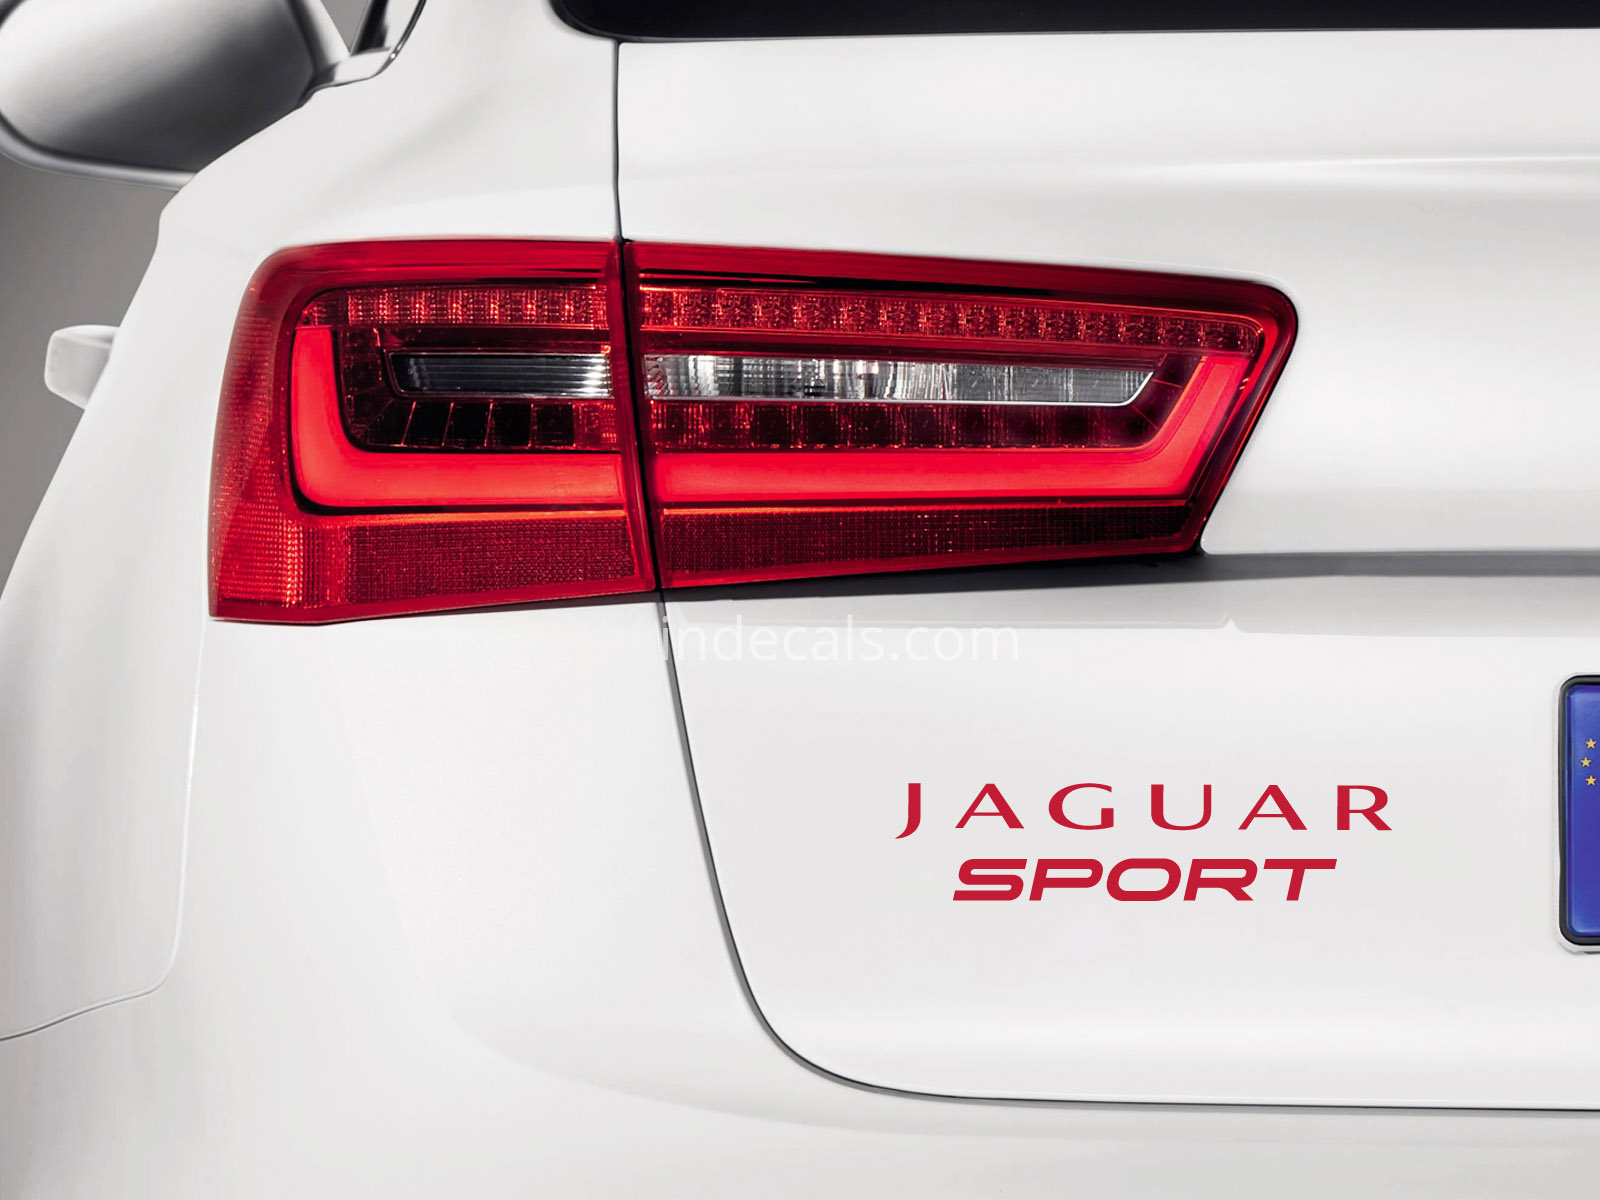 1 x Jaguar Sports Sticker for Trunk - Red